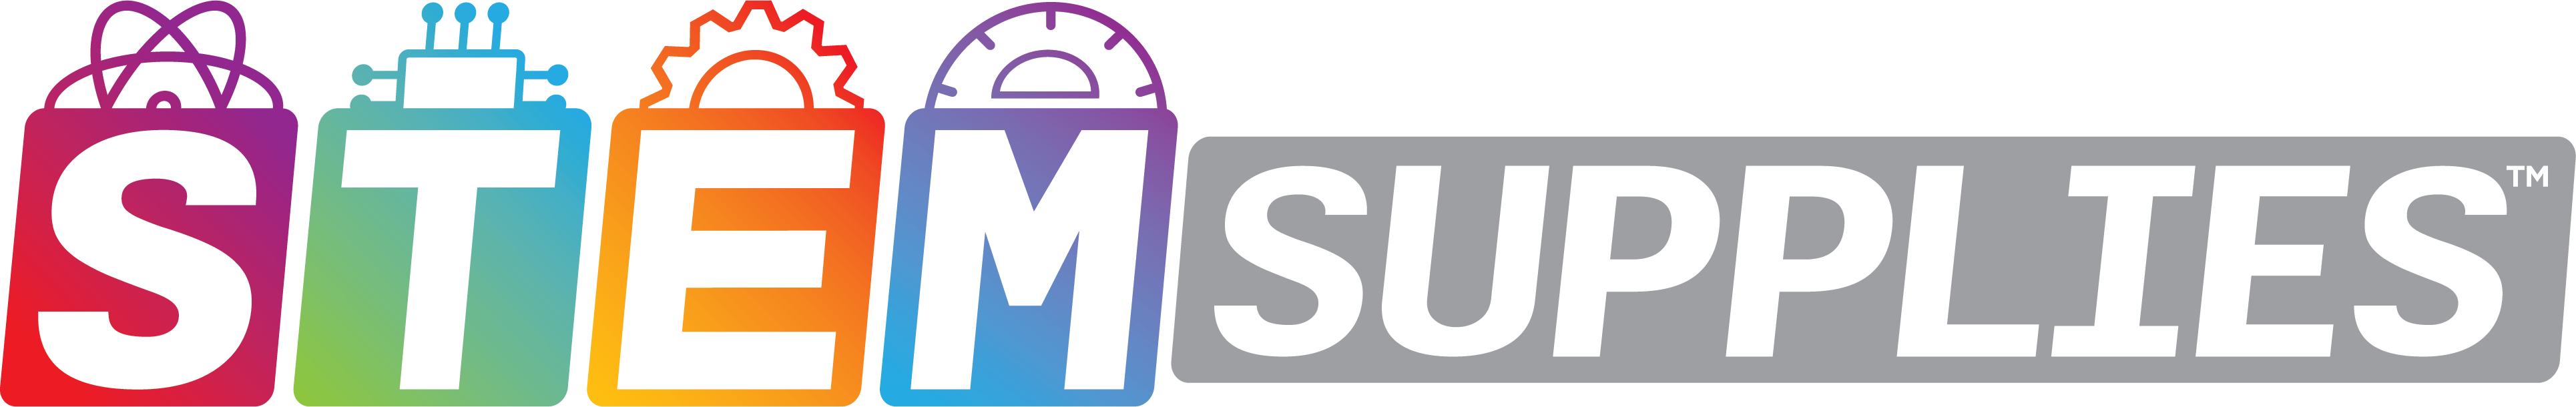 STEM Supplies Logo